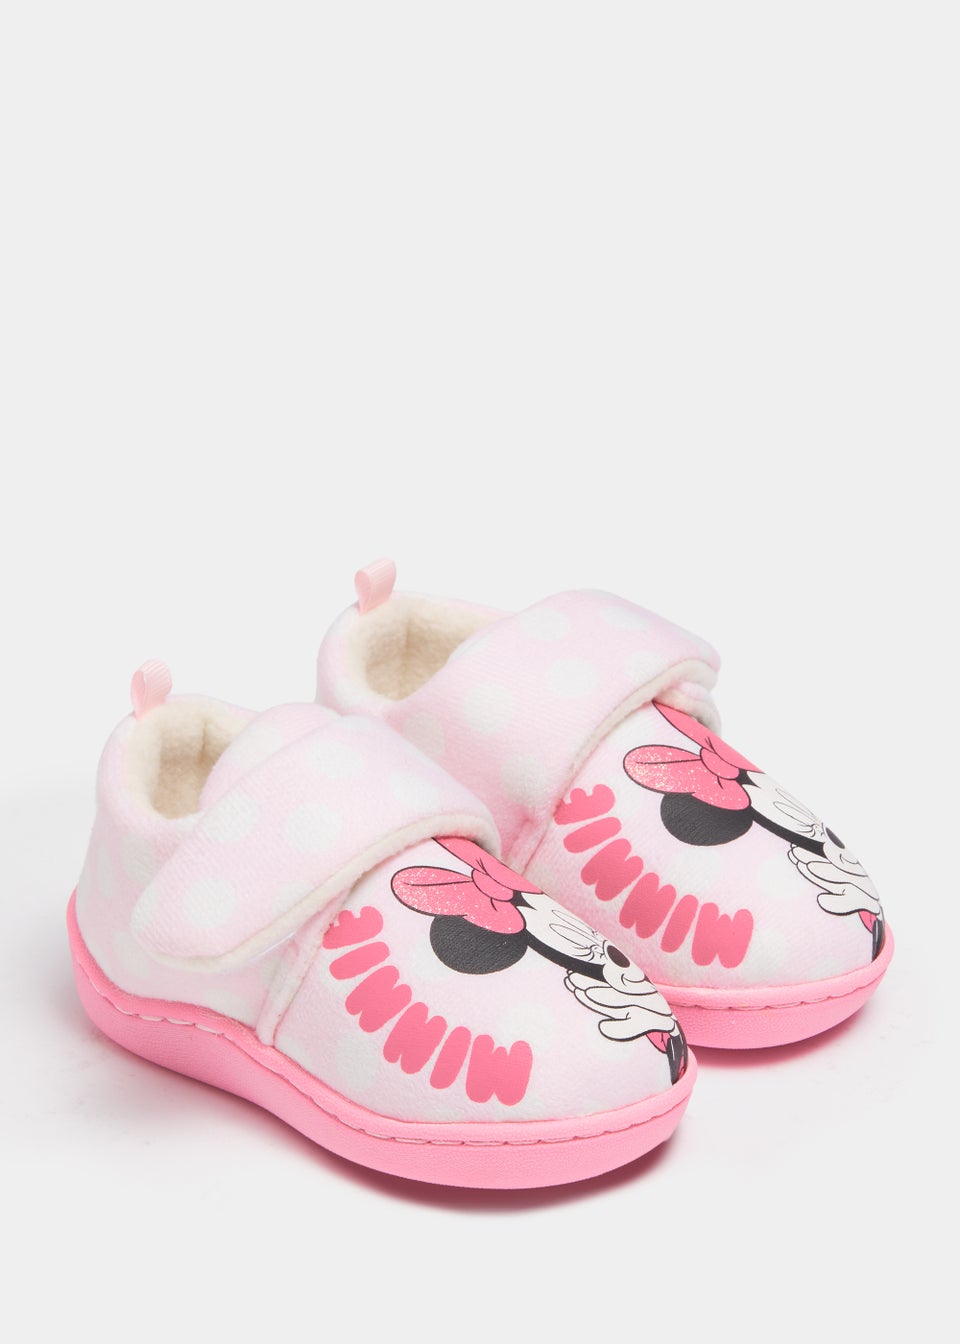 Havaianas Minnie Mouse Sandals for Women | Mercari